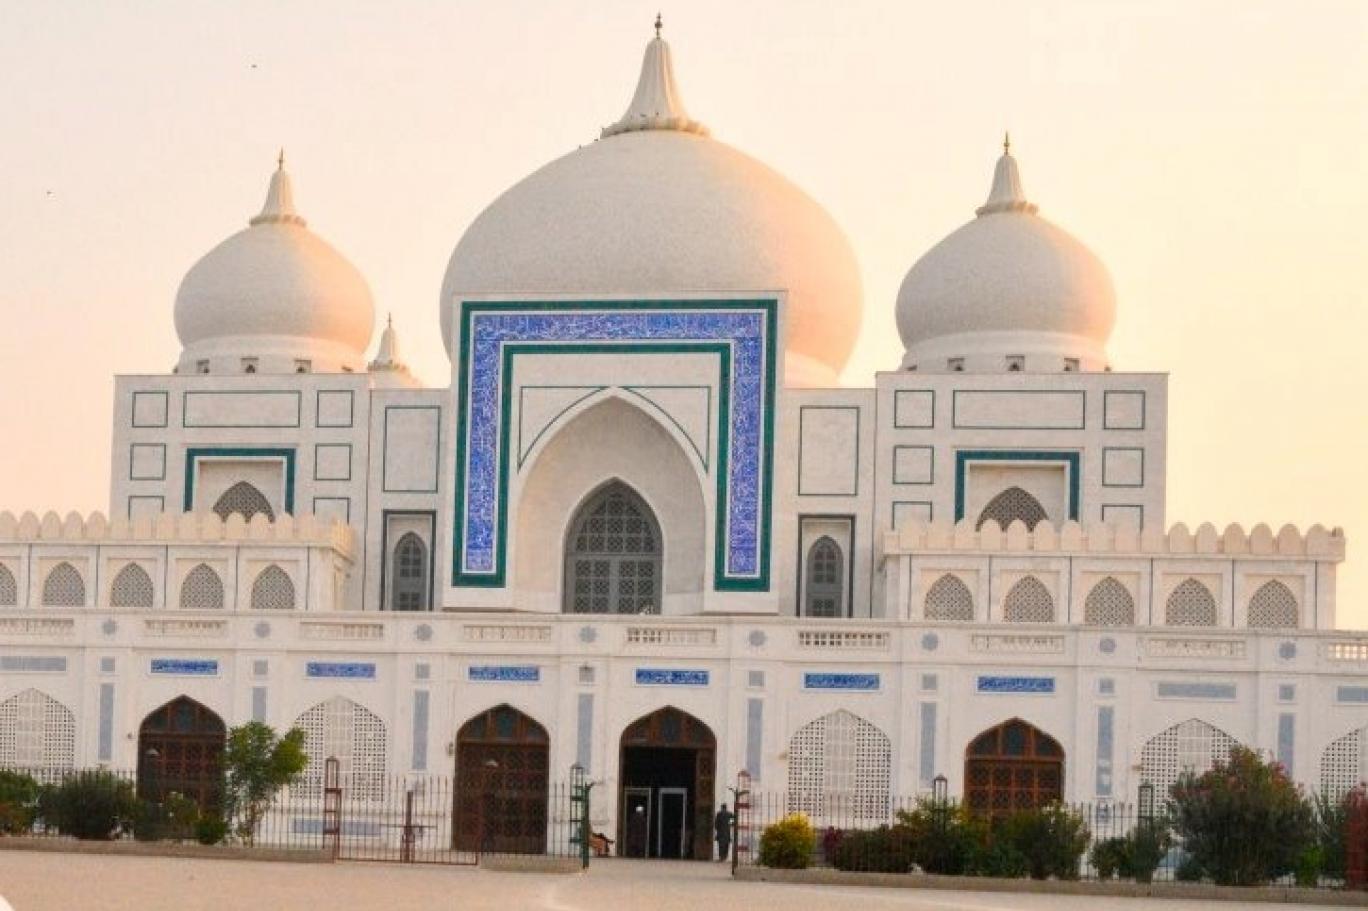 bhutto mausoleum in larkana.jpg